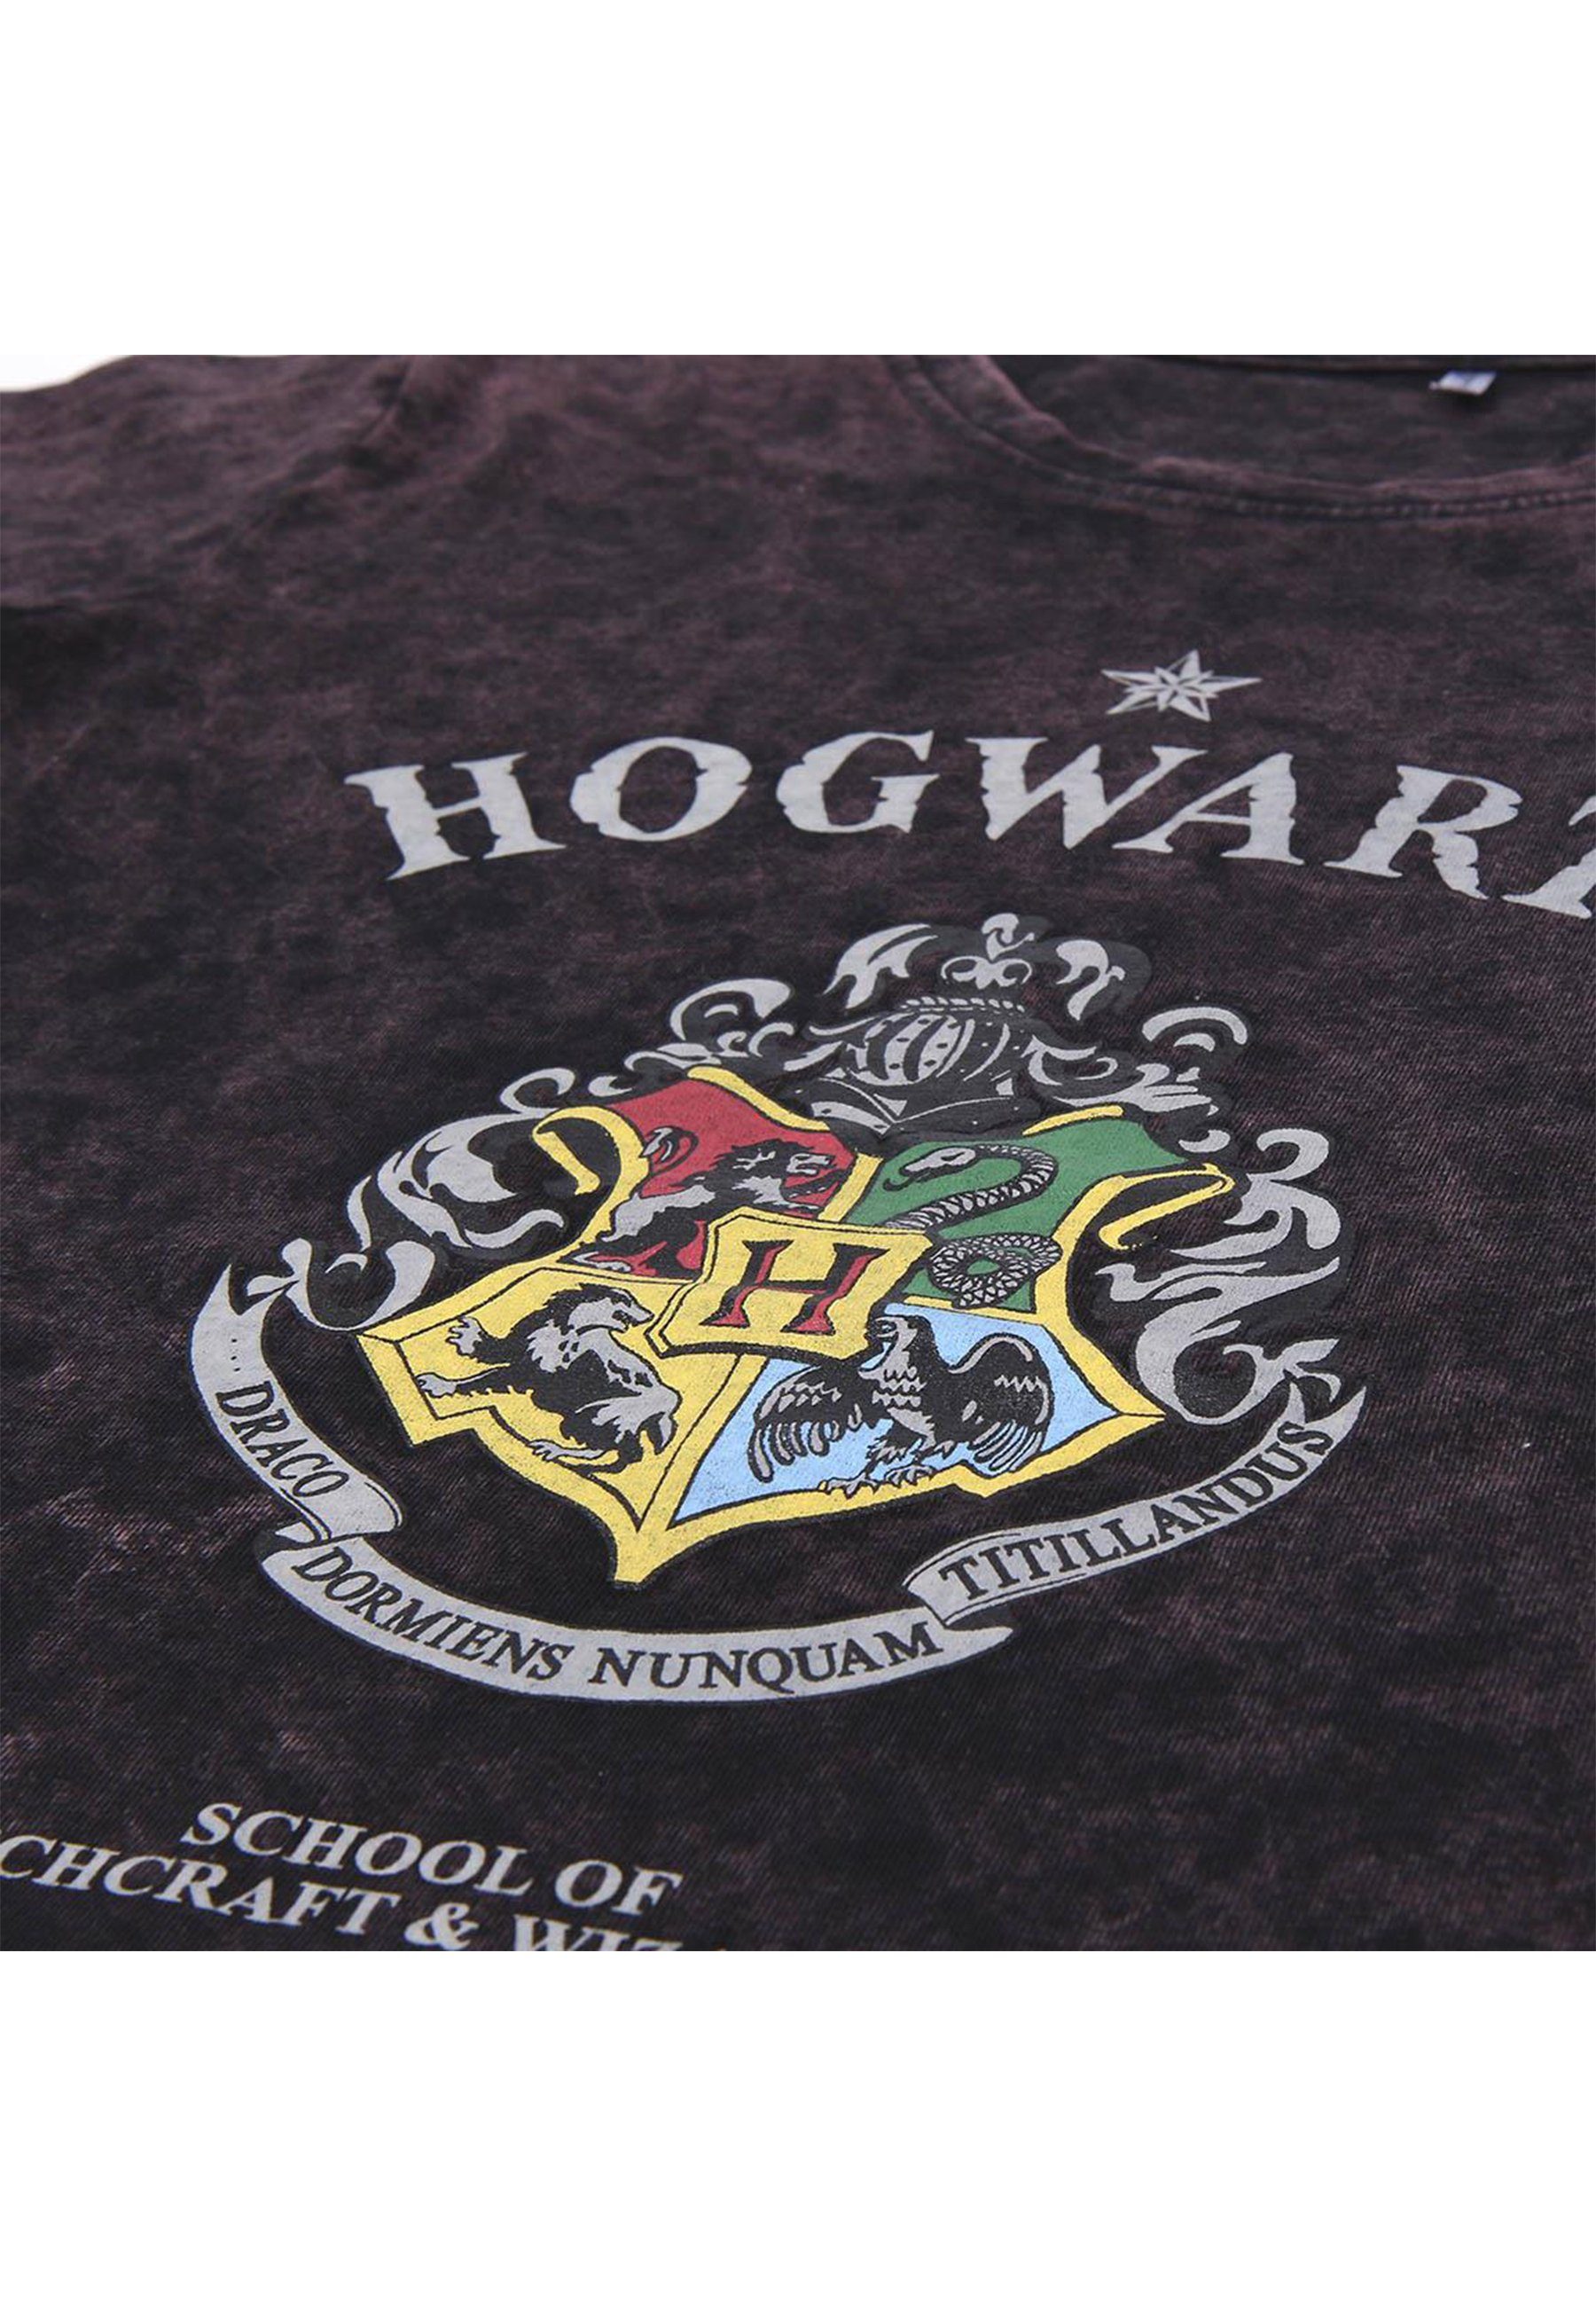 Harry Potter Langarmshirt Jungen Kinder Langarm T-Shirt Longsleeve Hogwarts